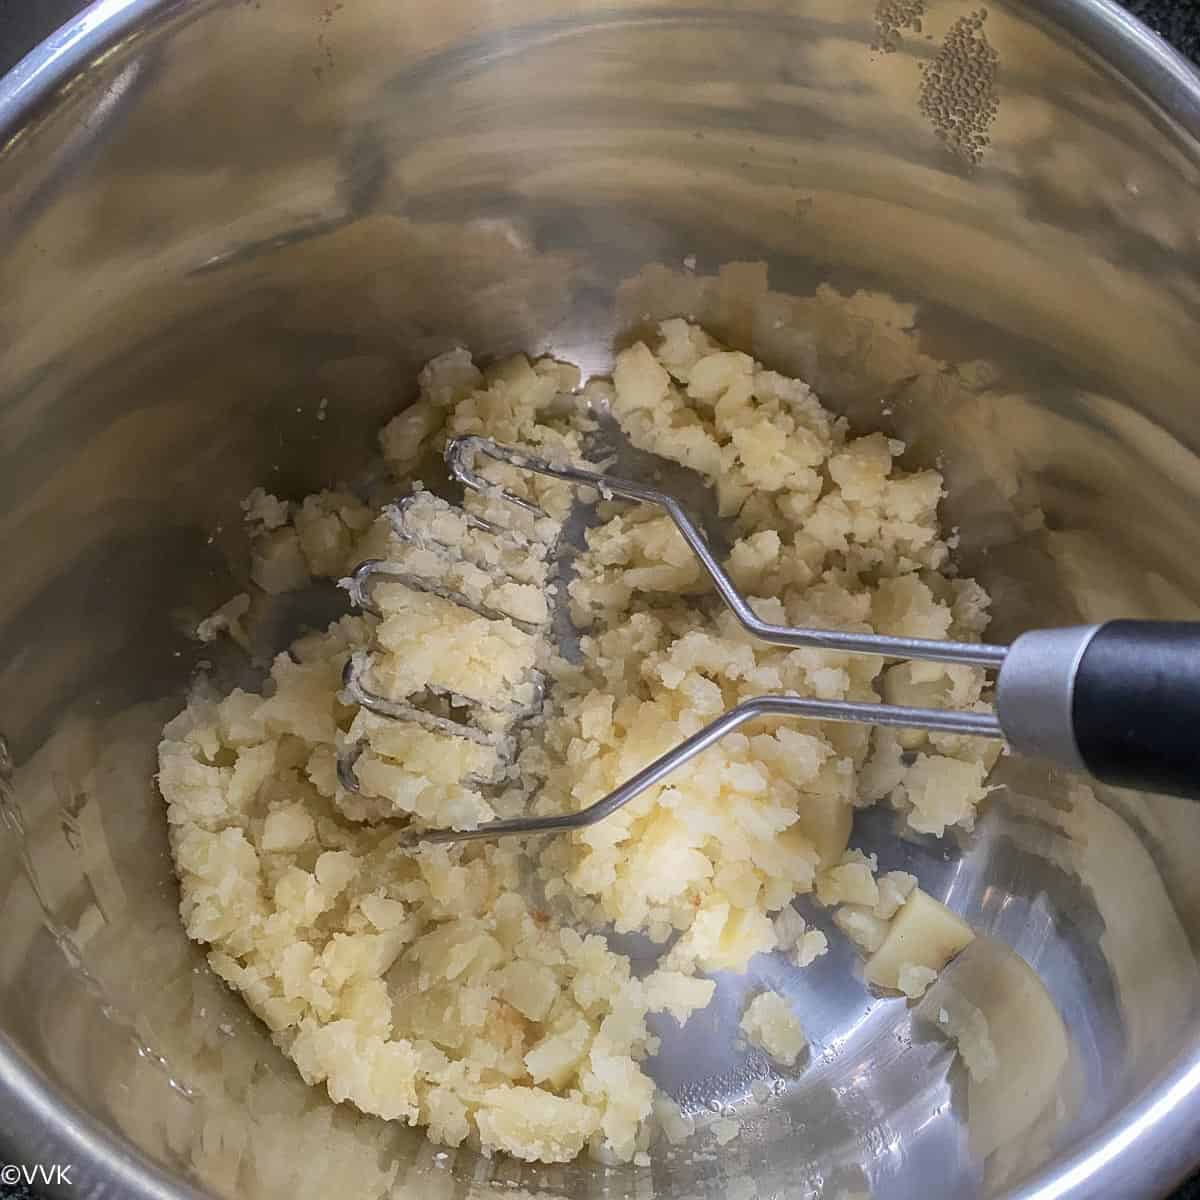 mashing the potatoes roughly